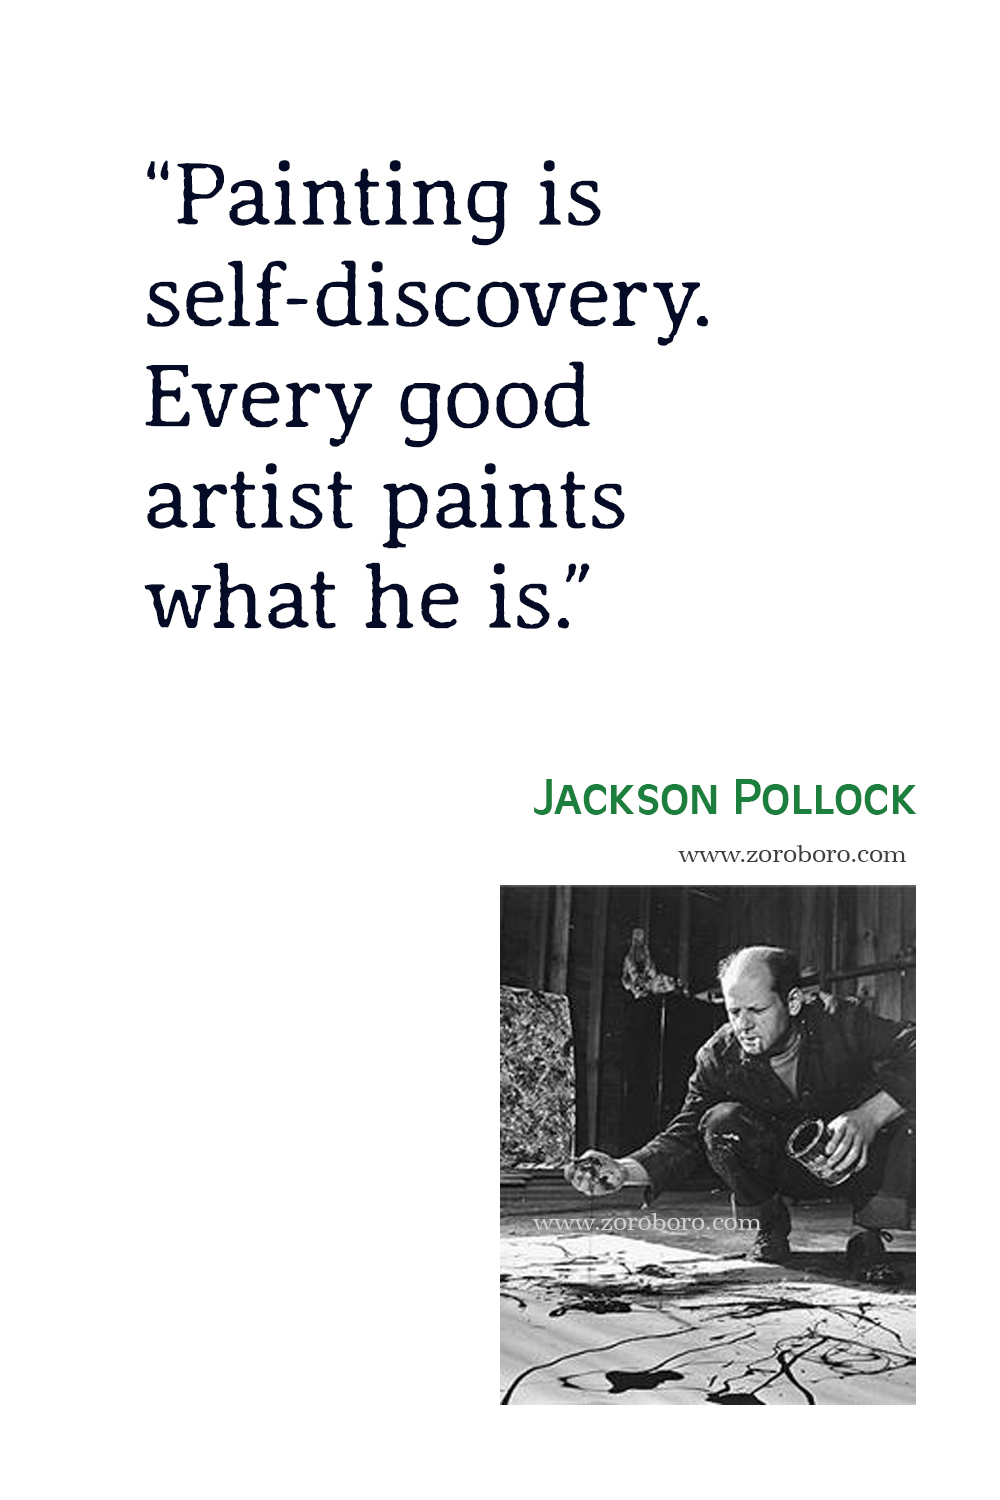 Jackson Pollock Quotes, Jackson Pollock Paintings, Jackson Pollock Canvas Quotes, Jackson Pollock Techniques Quotes.